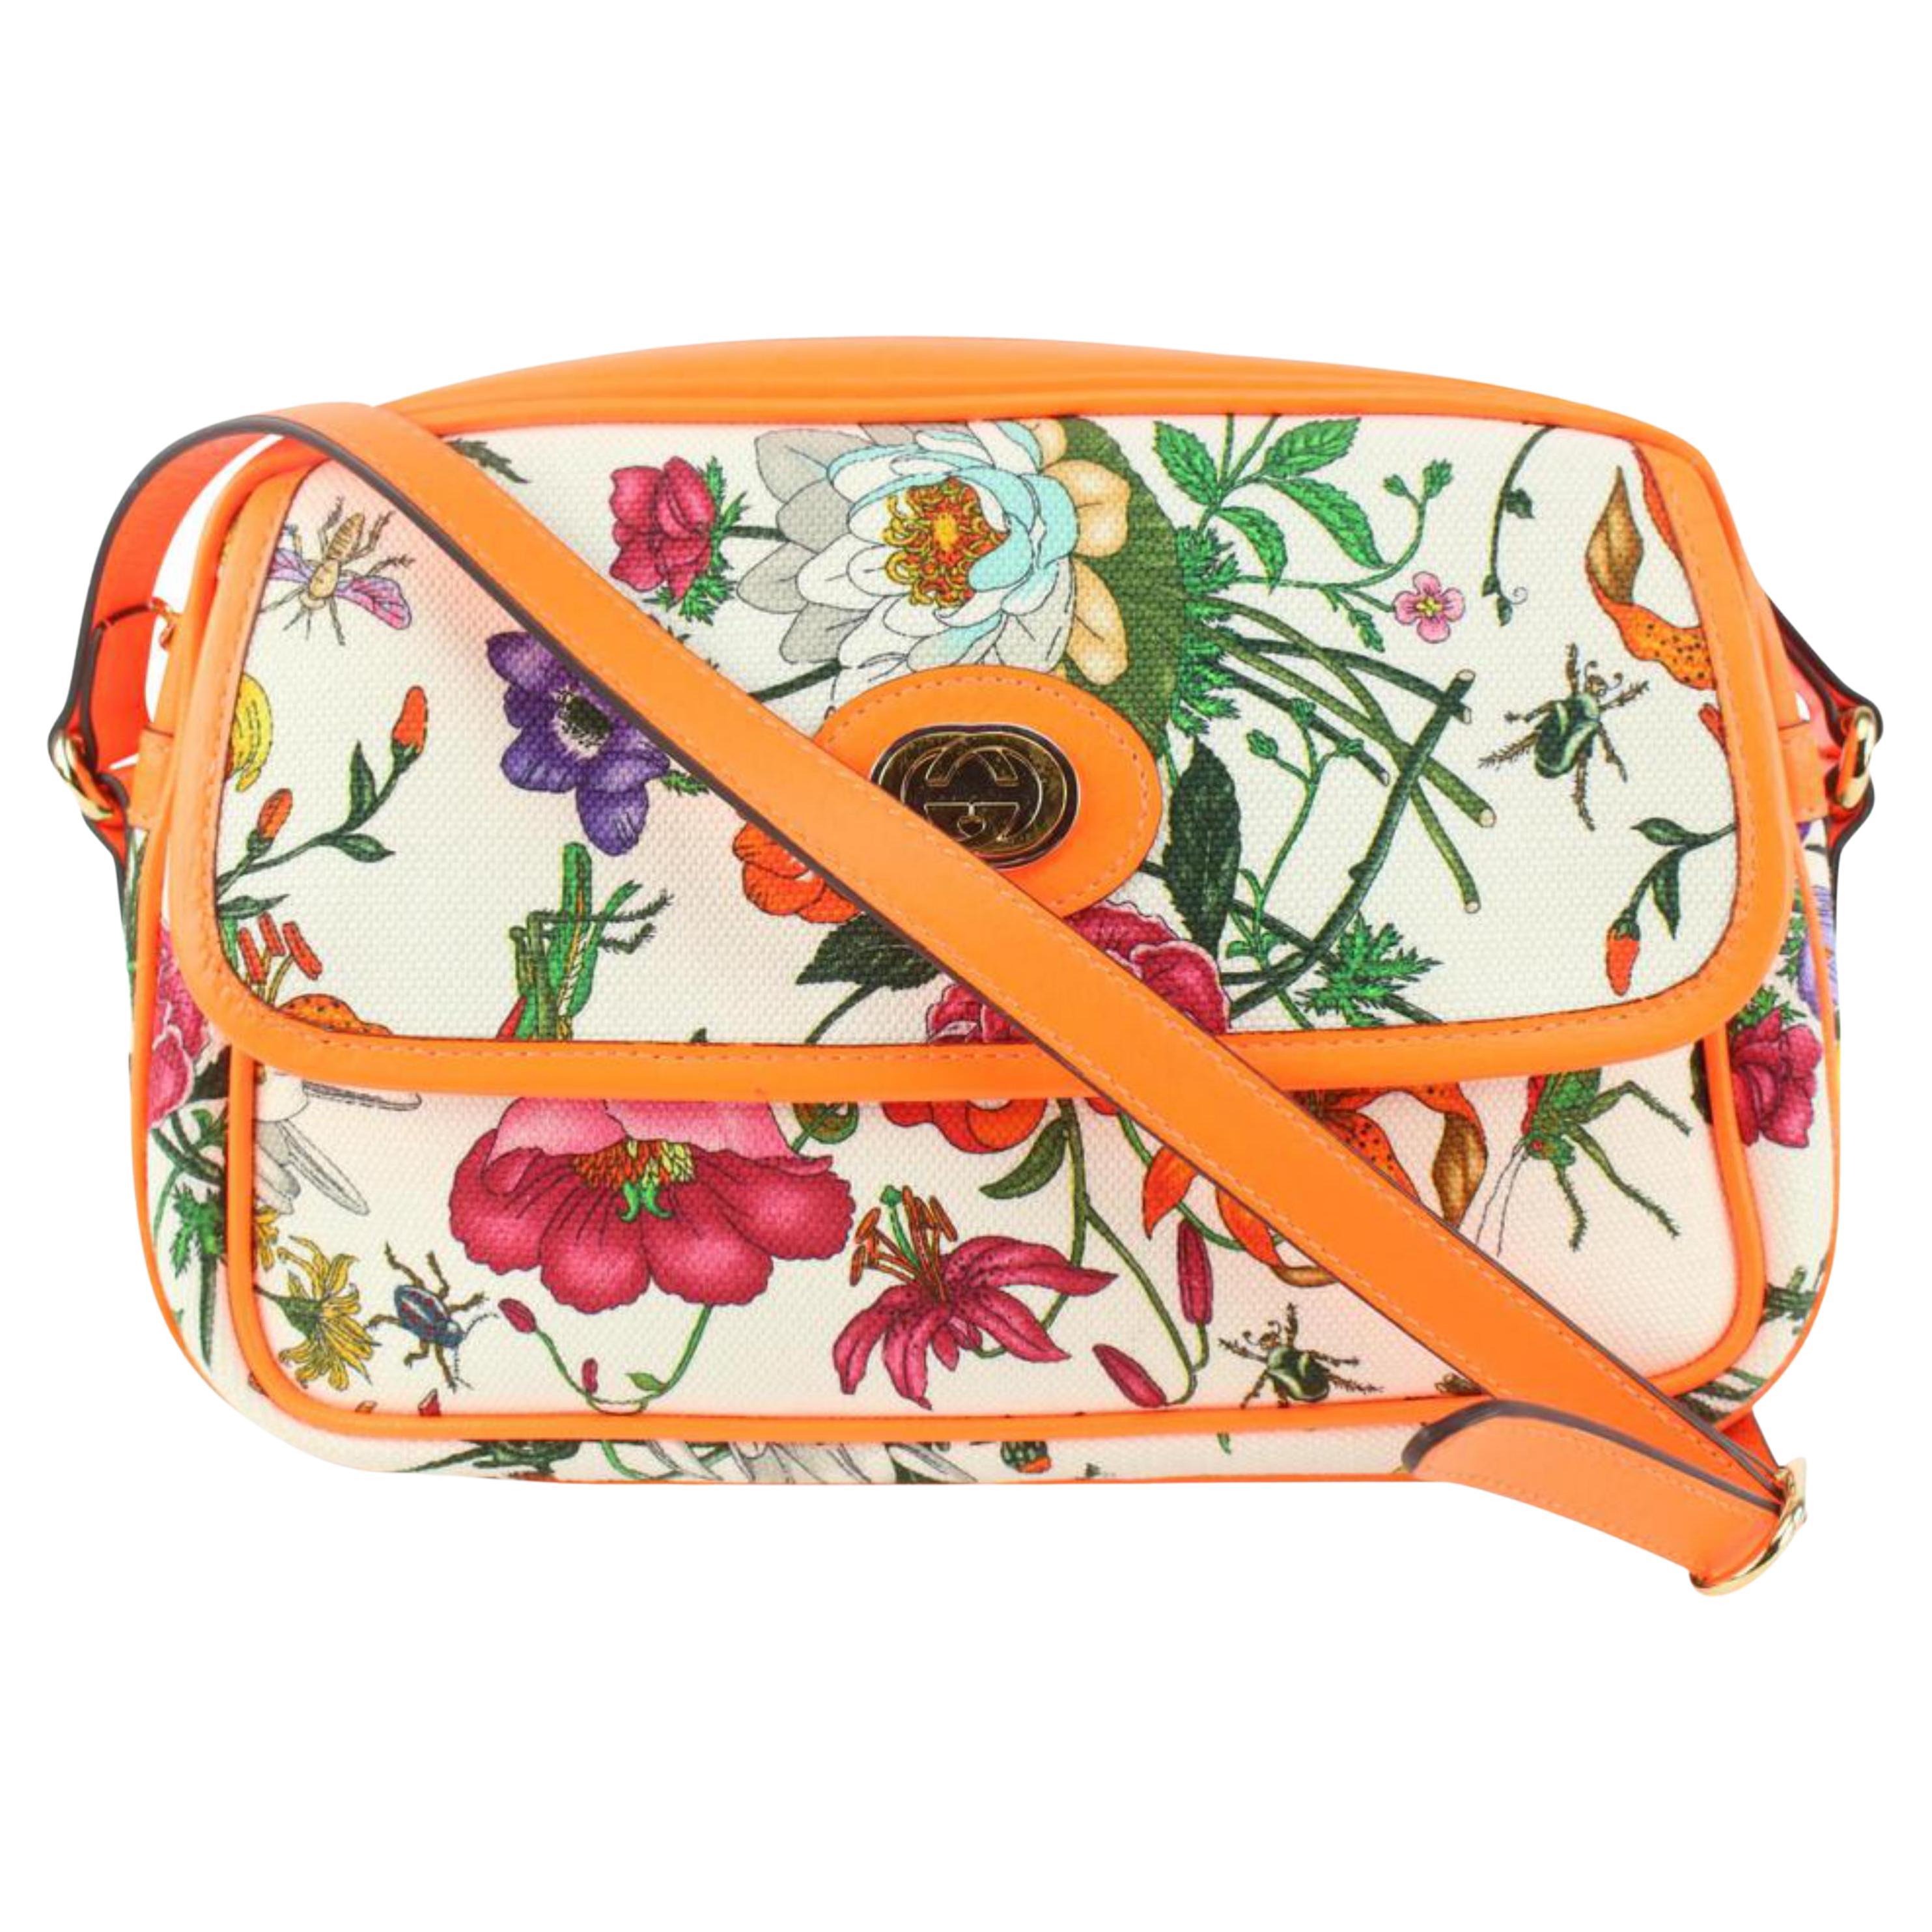 Gucci Neon Orange White Flora Floral Crossbody Bag 1118g26